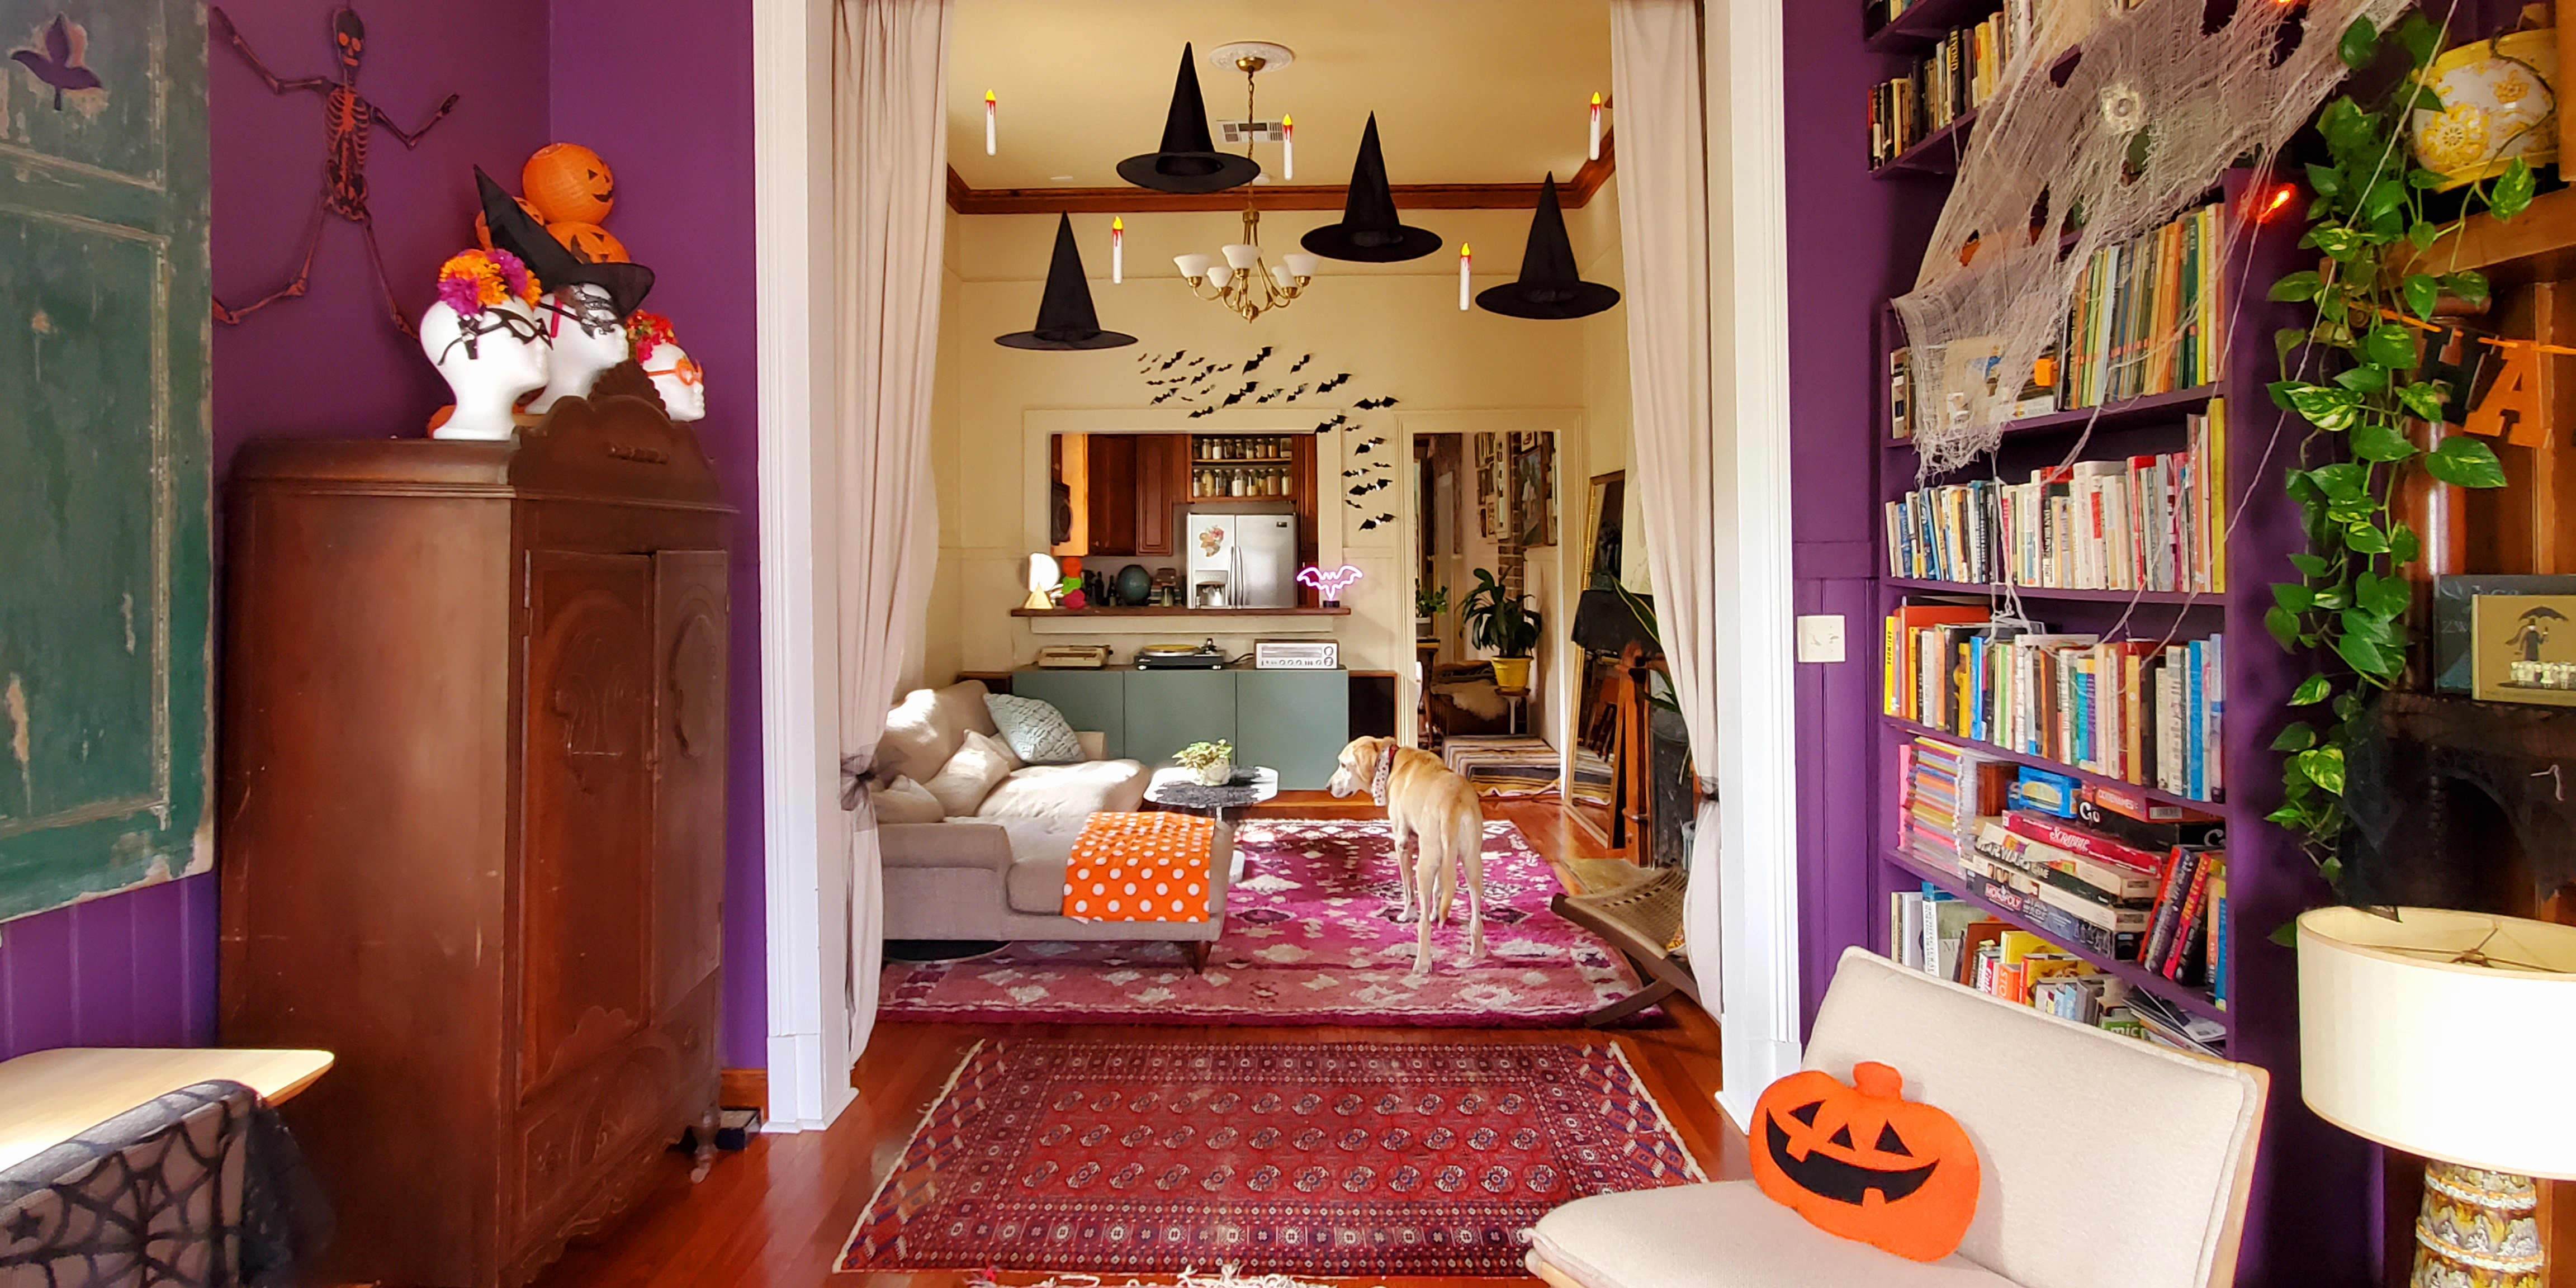 https://cdn.apartmenttherapy.info/image/upload/v1598847341/at/house%20tours/2020-09/HD/halloween_decor_purple.jpg